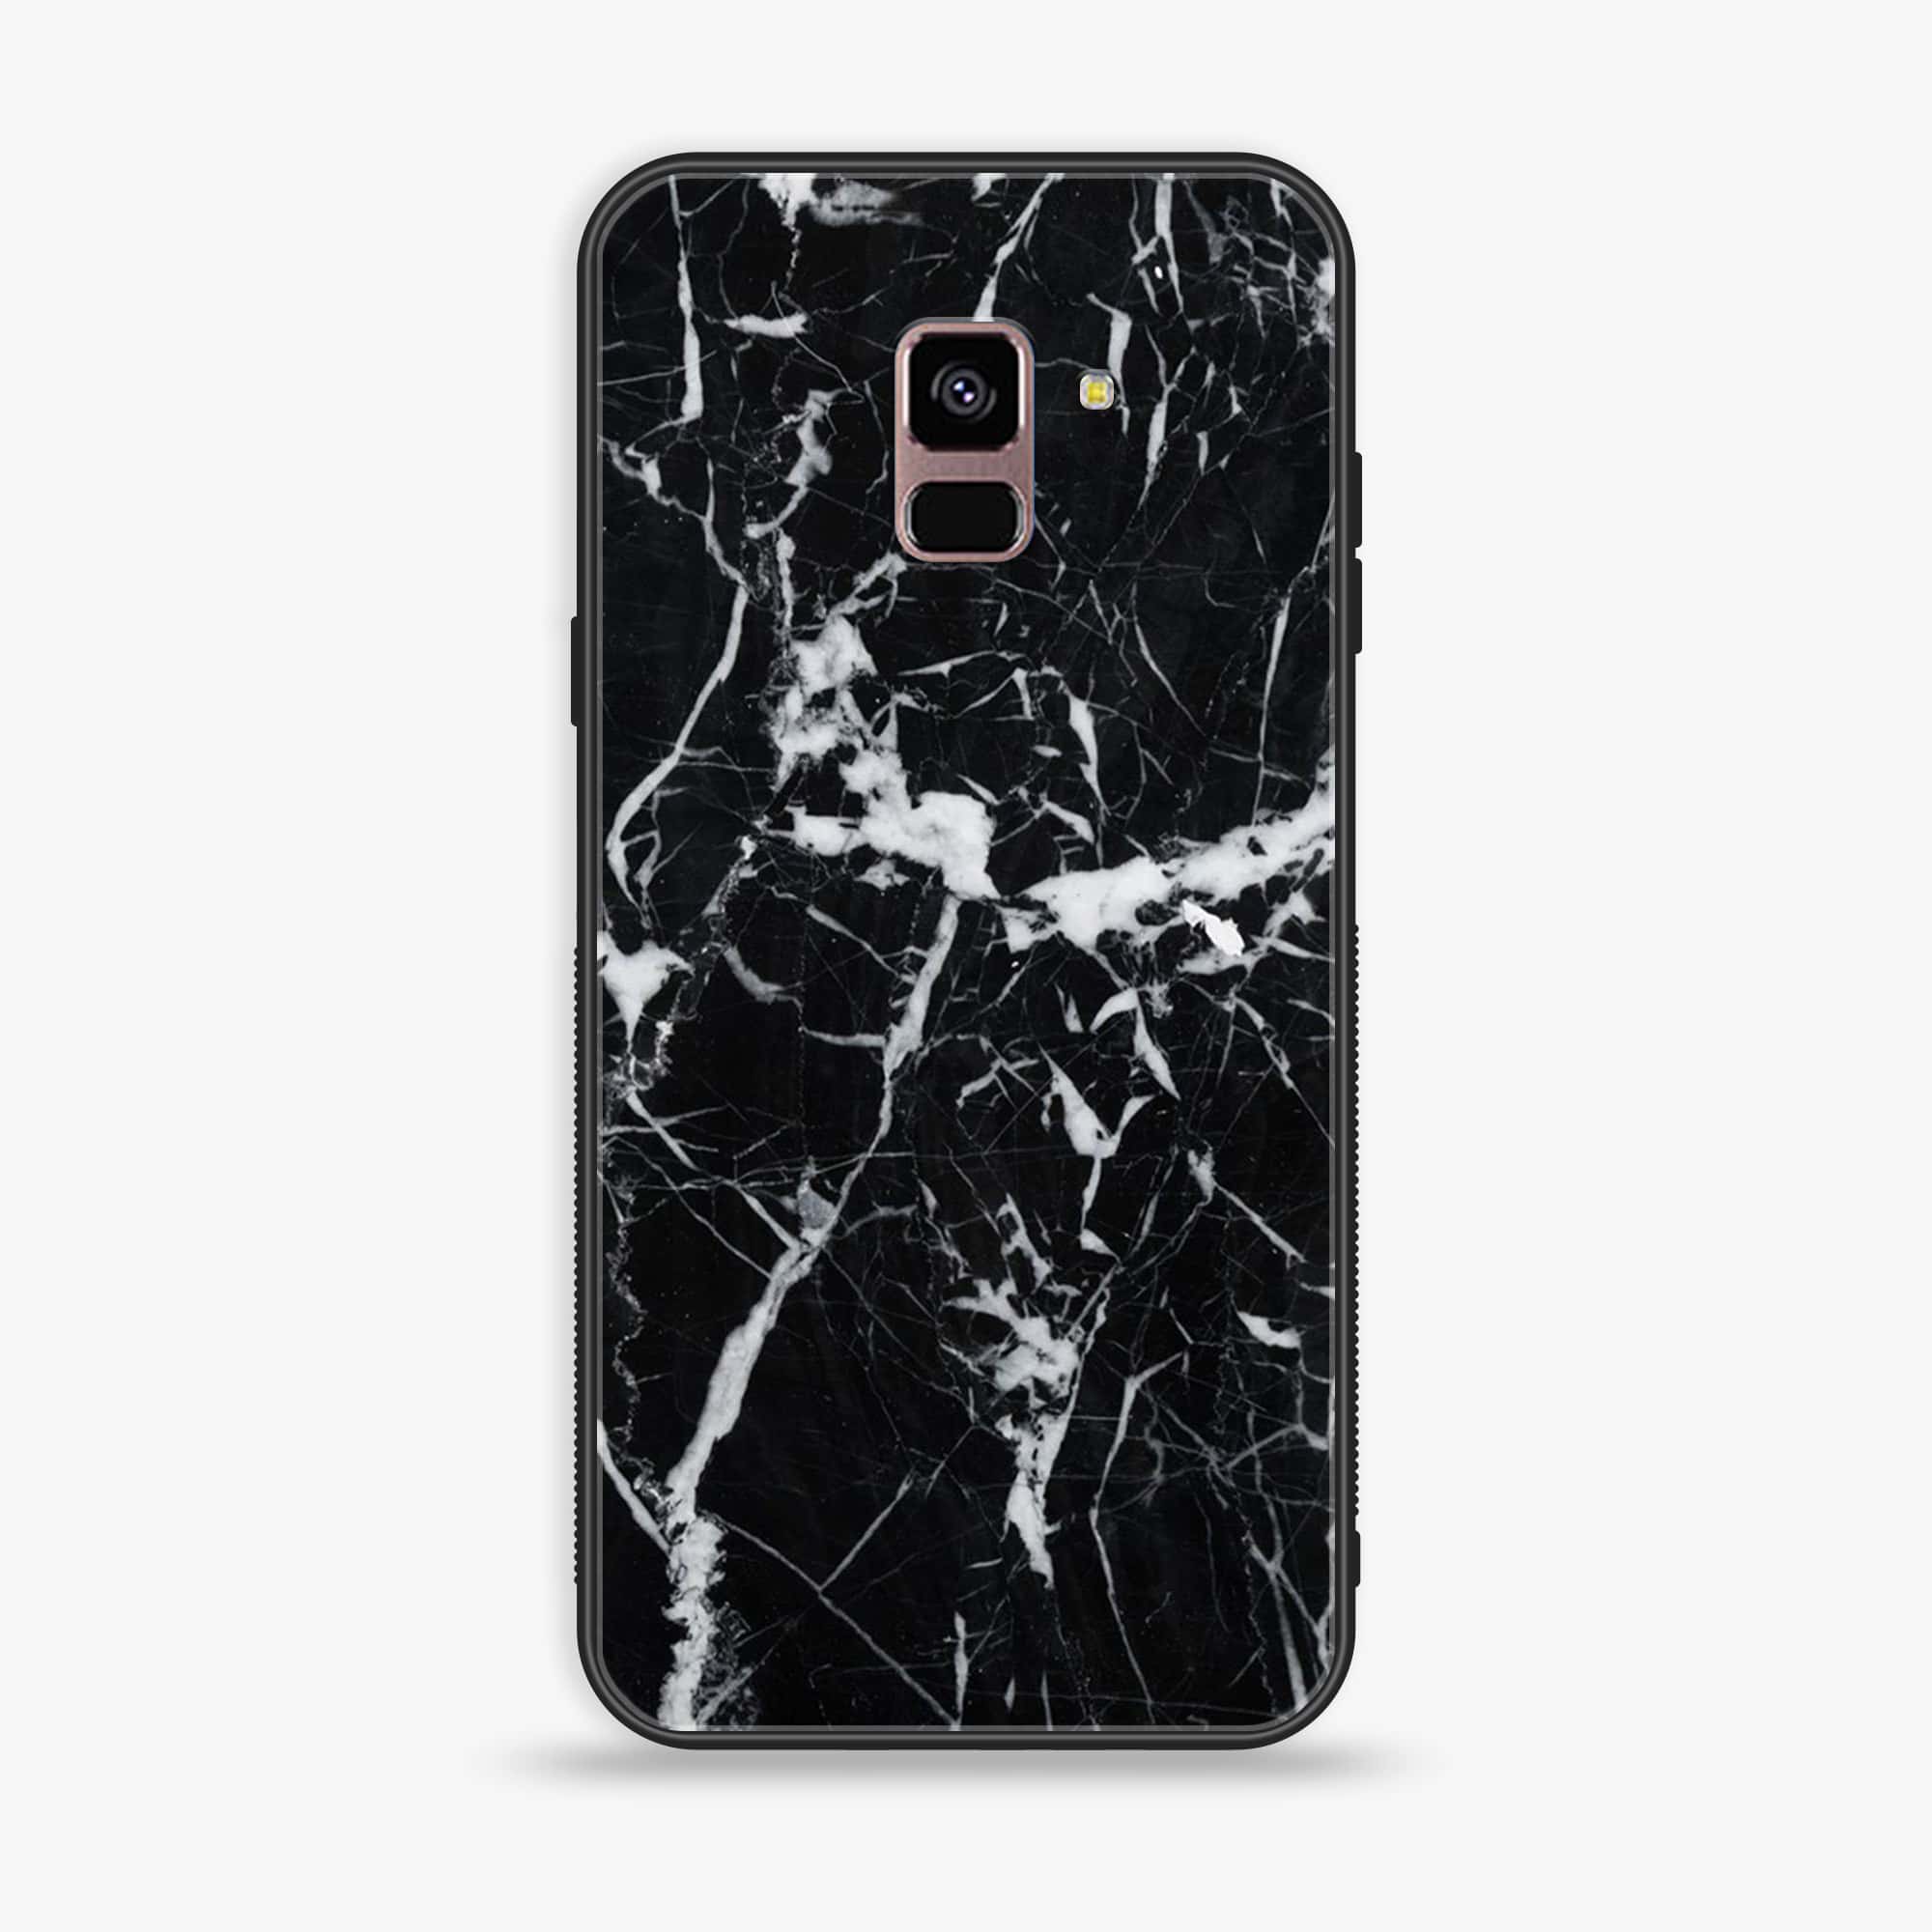 Samsung Galaxy A8+ (2018) - Black Marble Series - Premium Printed Glass soft Bumper shock Proof Case